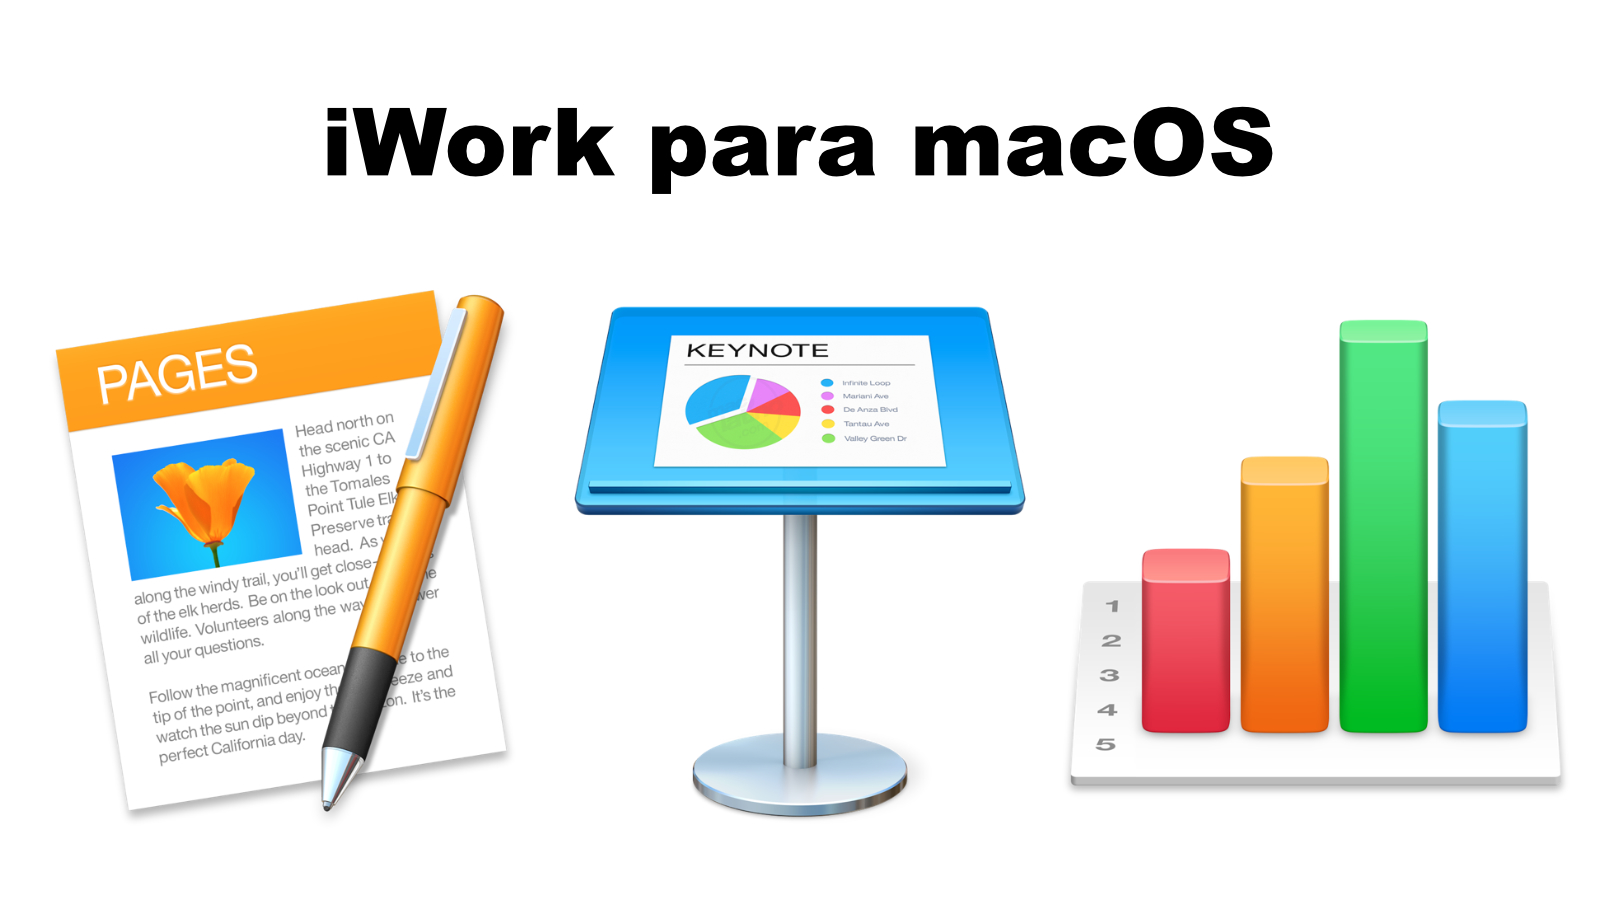 iWork para macOS